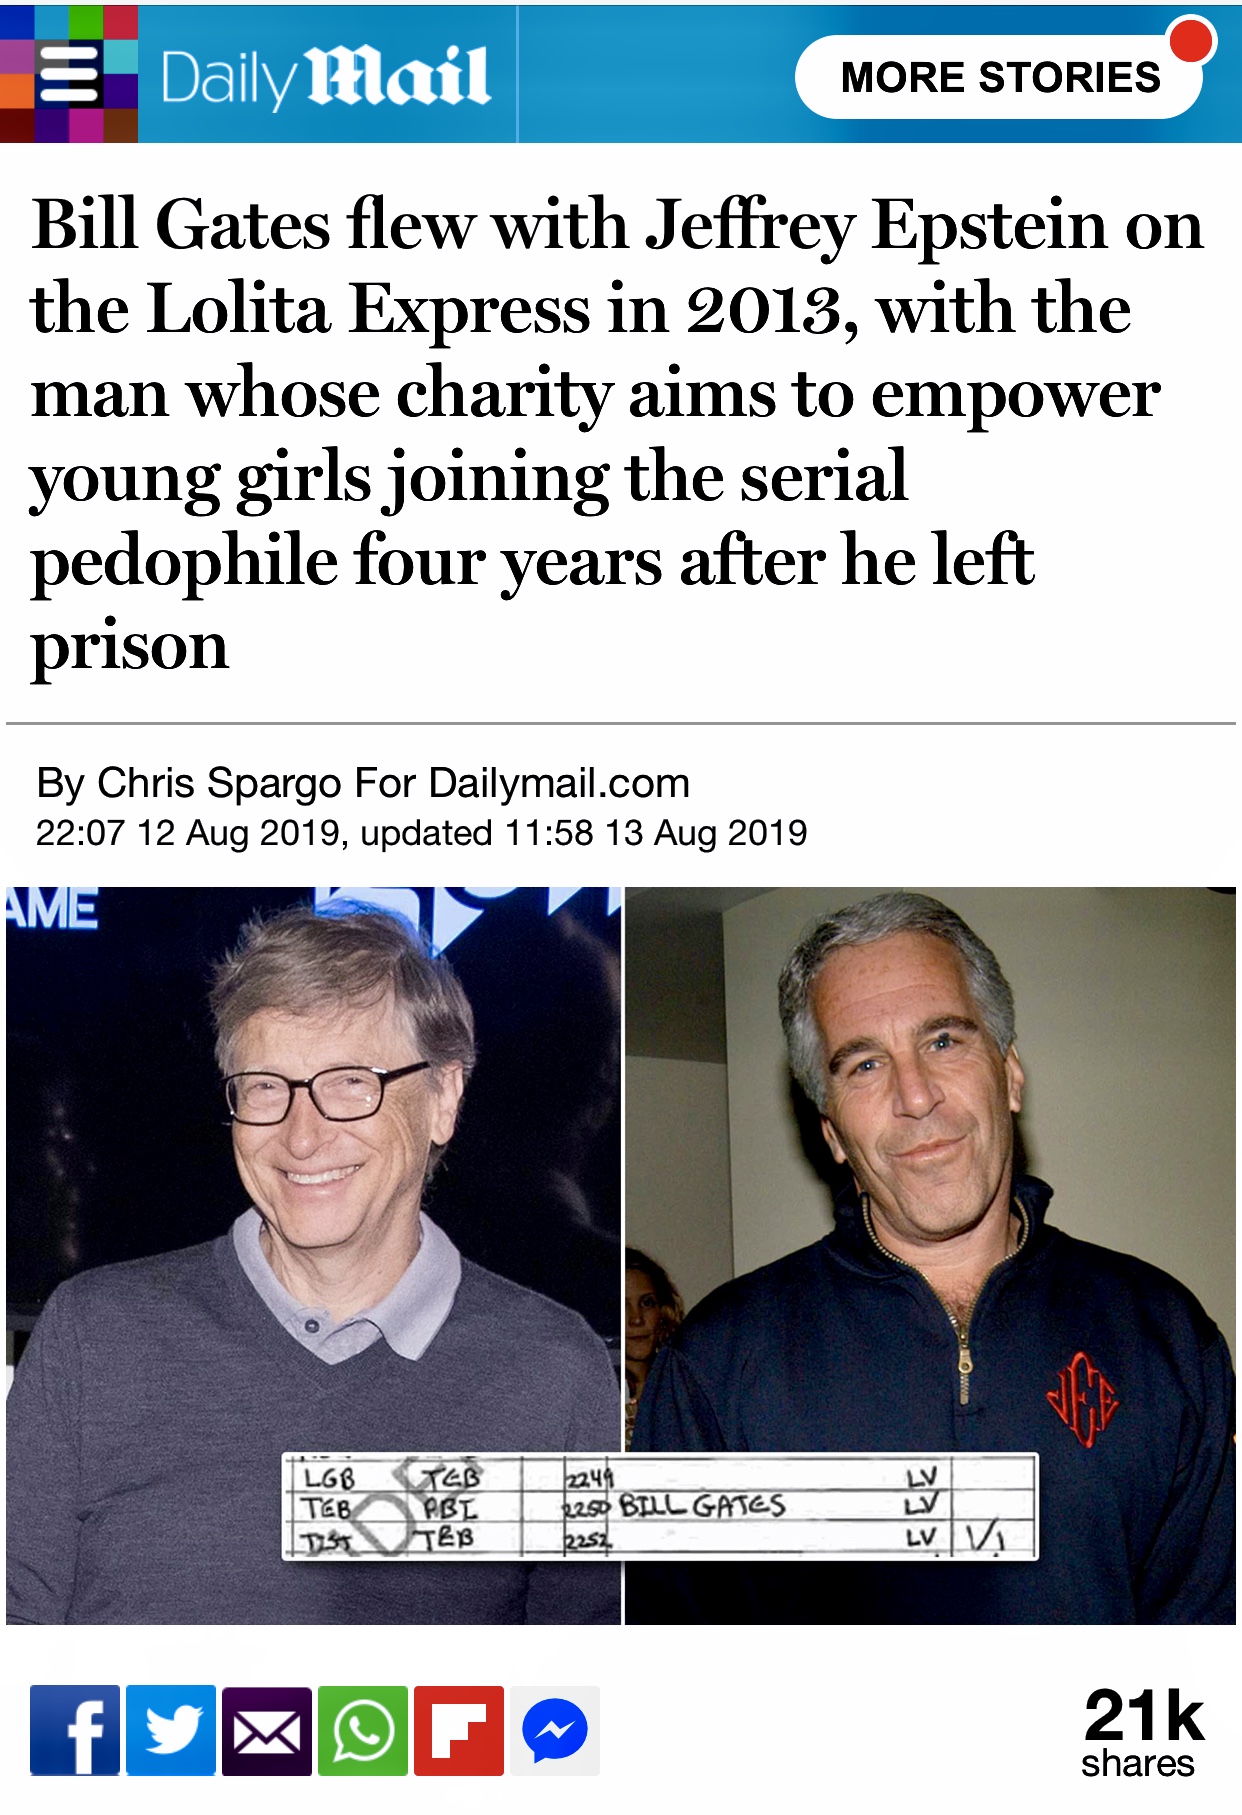 Bill Gates flew with Jeffrey Epstein on the Lolita Express in 2013